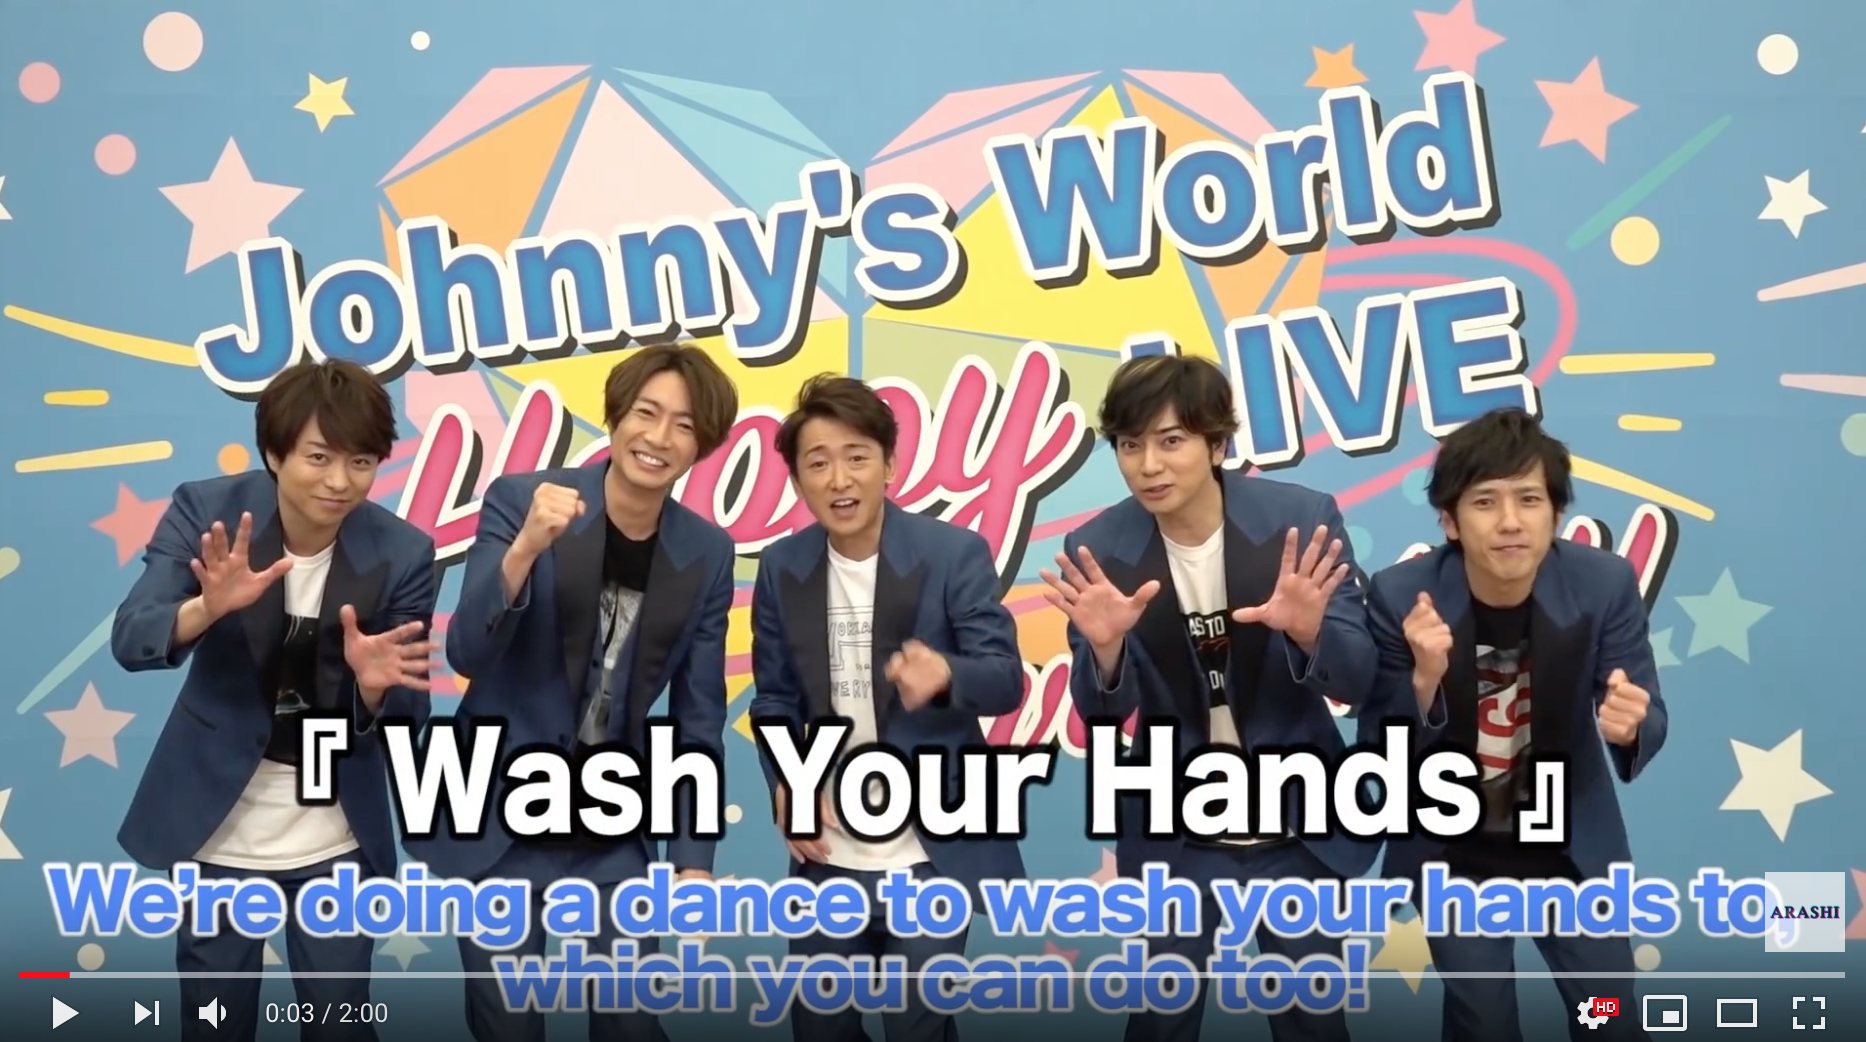 Japanese Boy Bands Debut New Hand Washing Song With Dance Moves And English Lyrics Videos Soranews24 Japan News